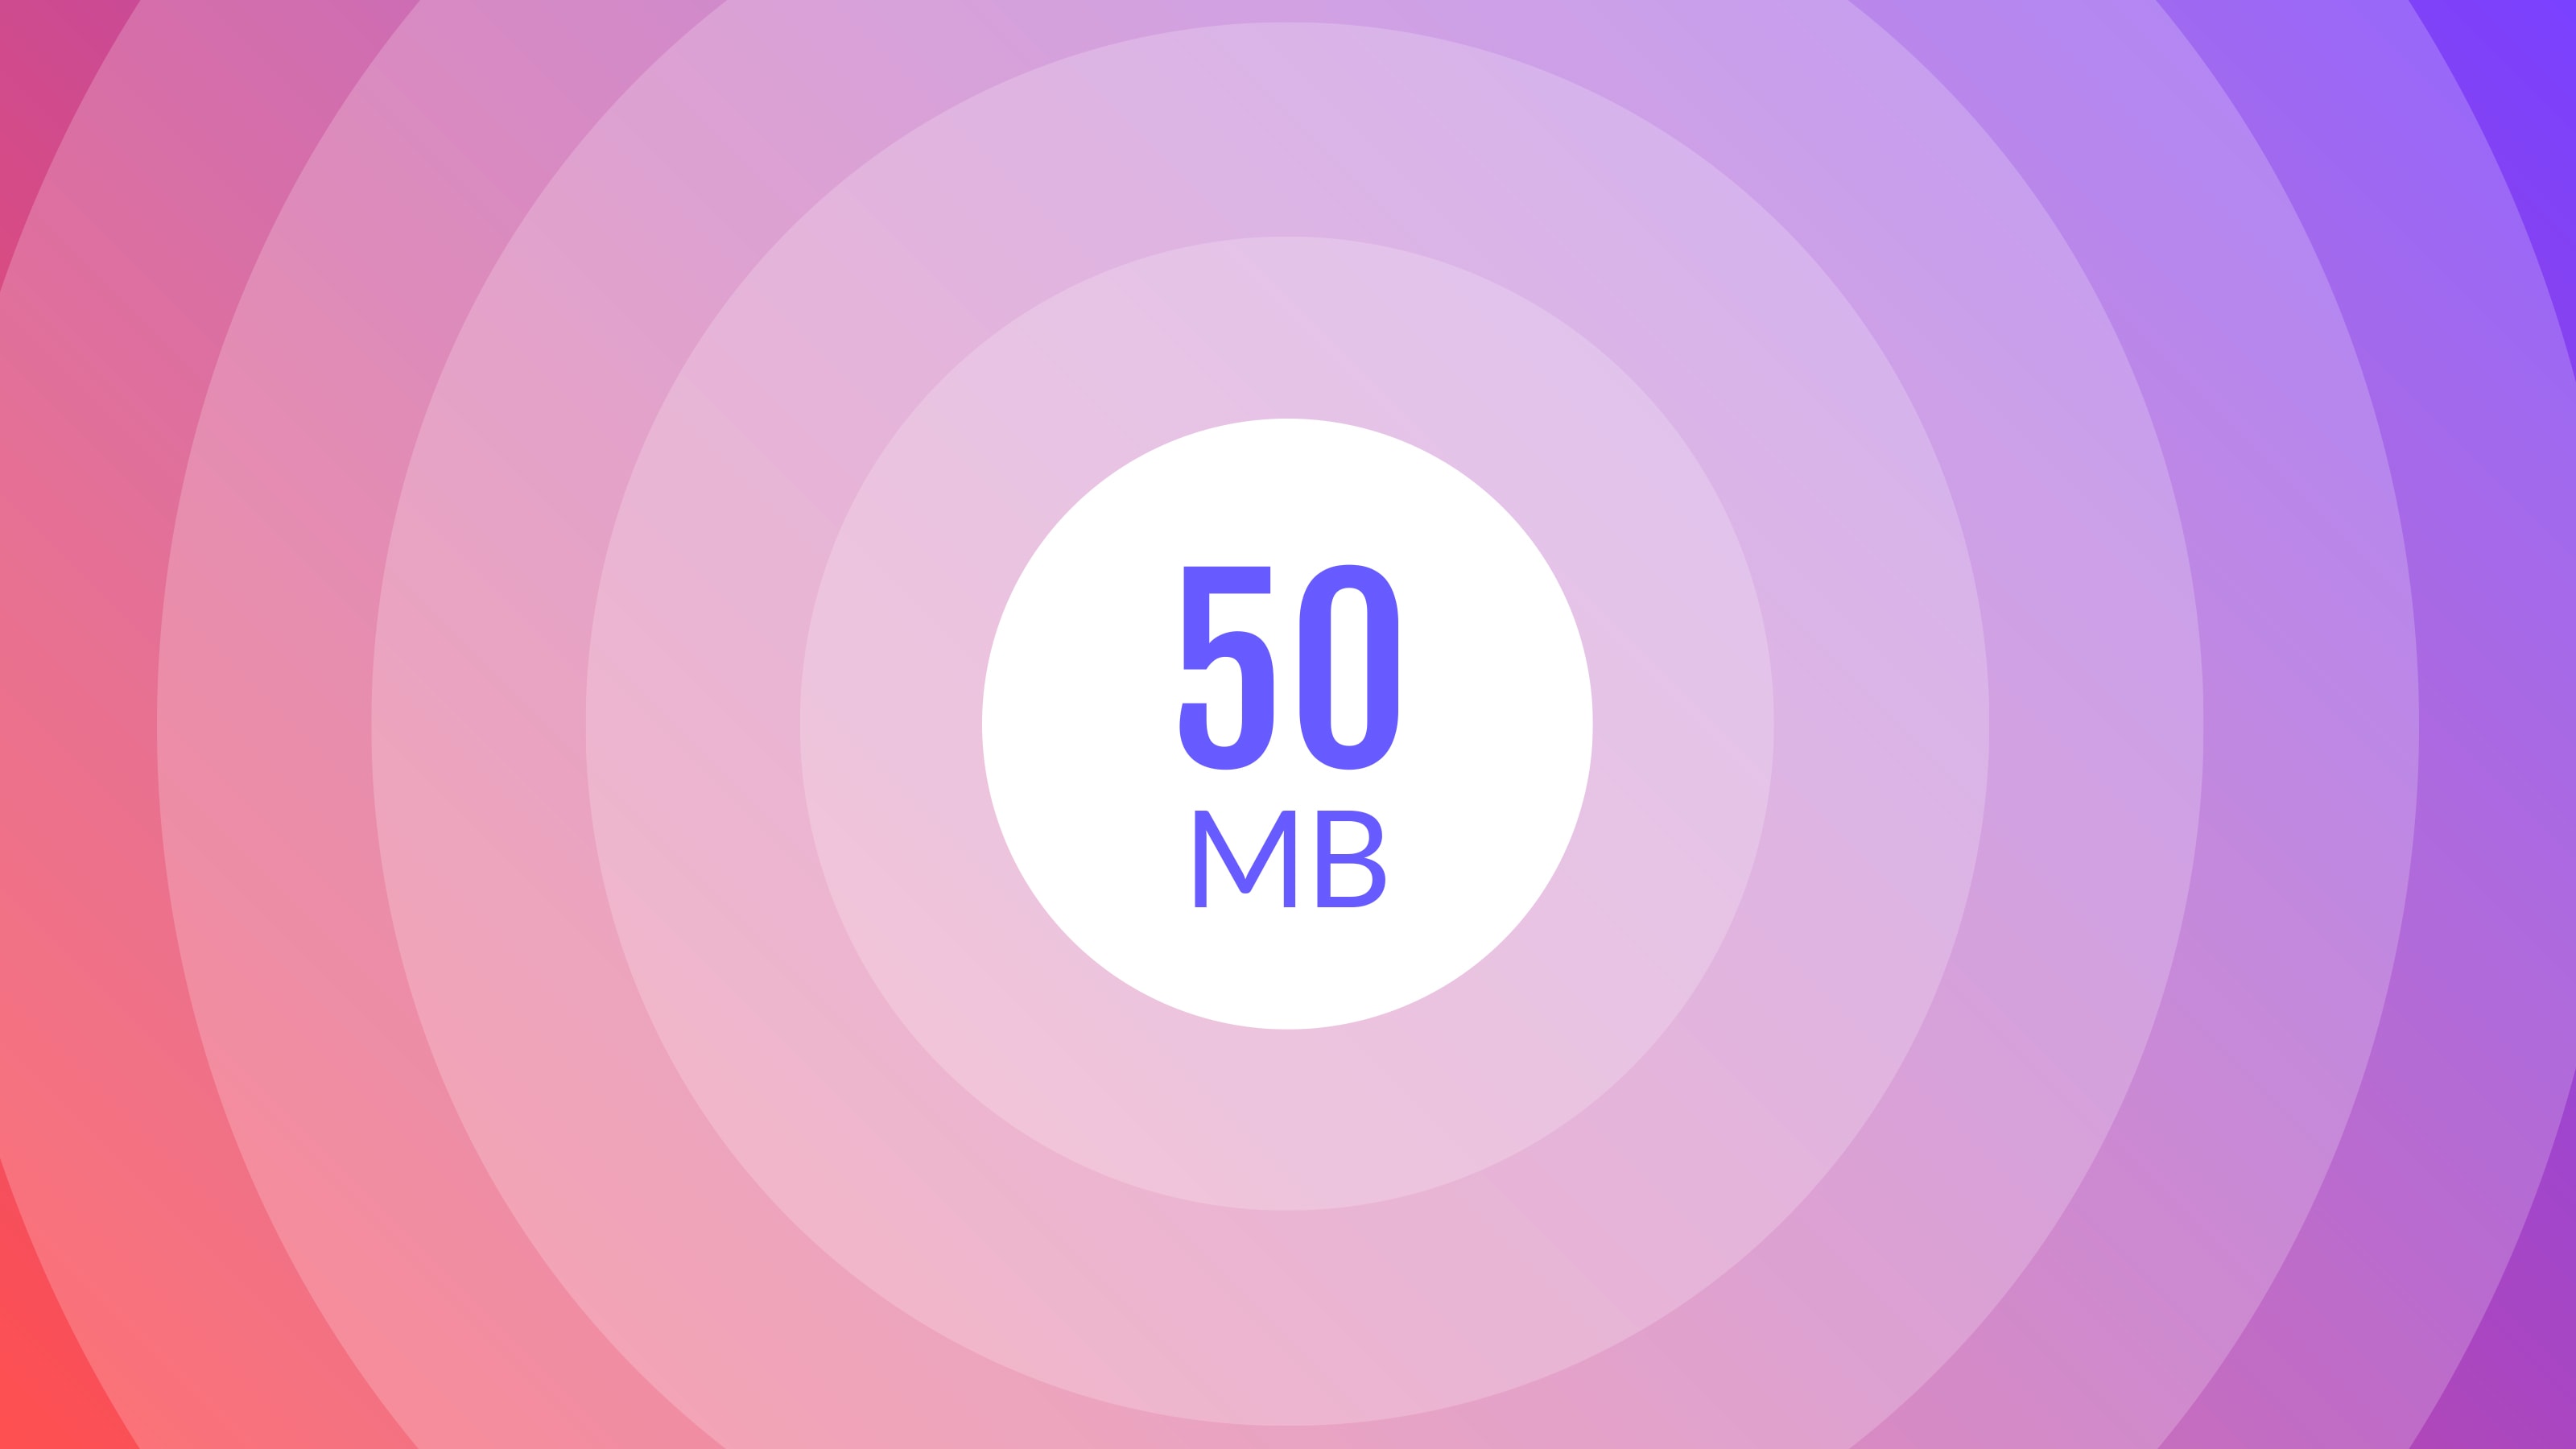 A circle starting 50 MB